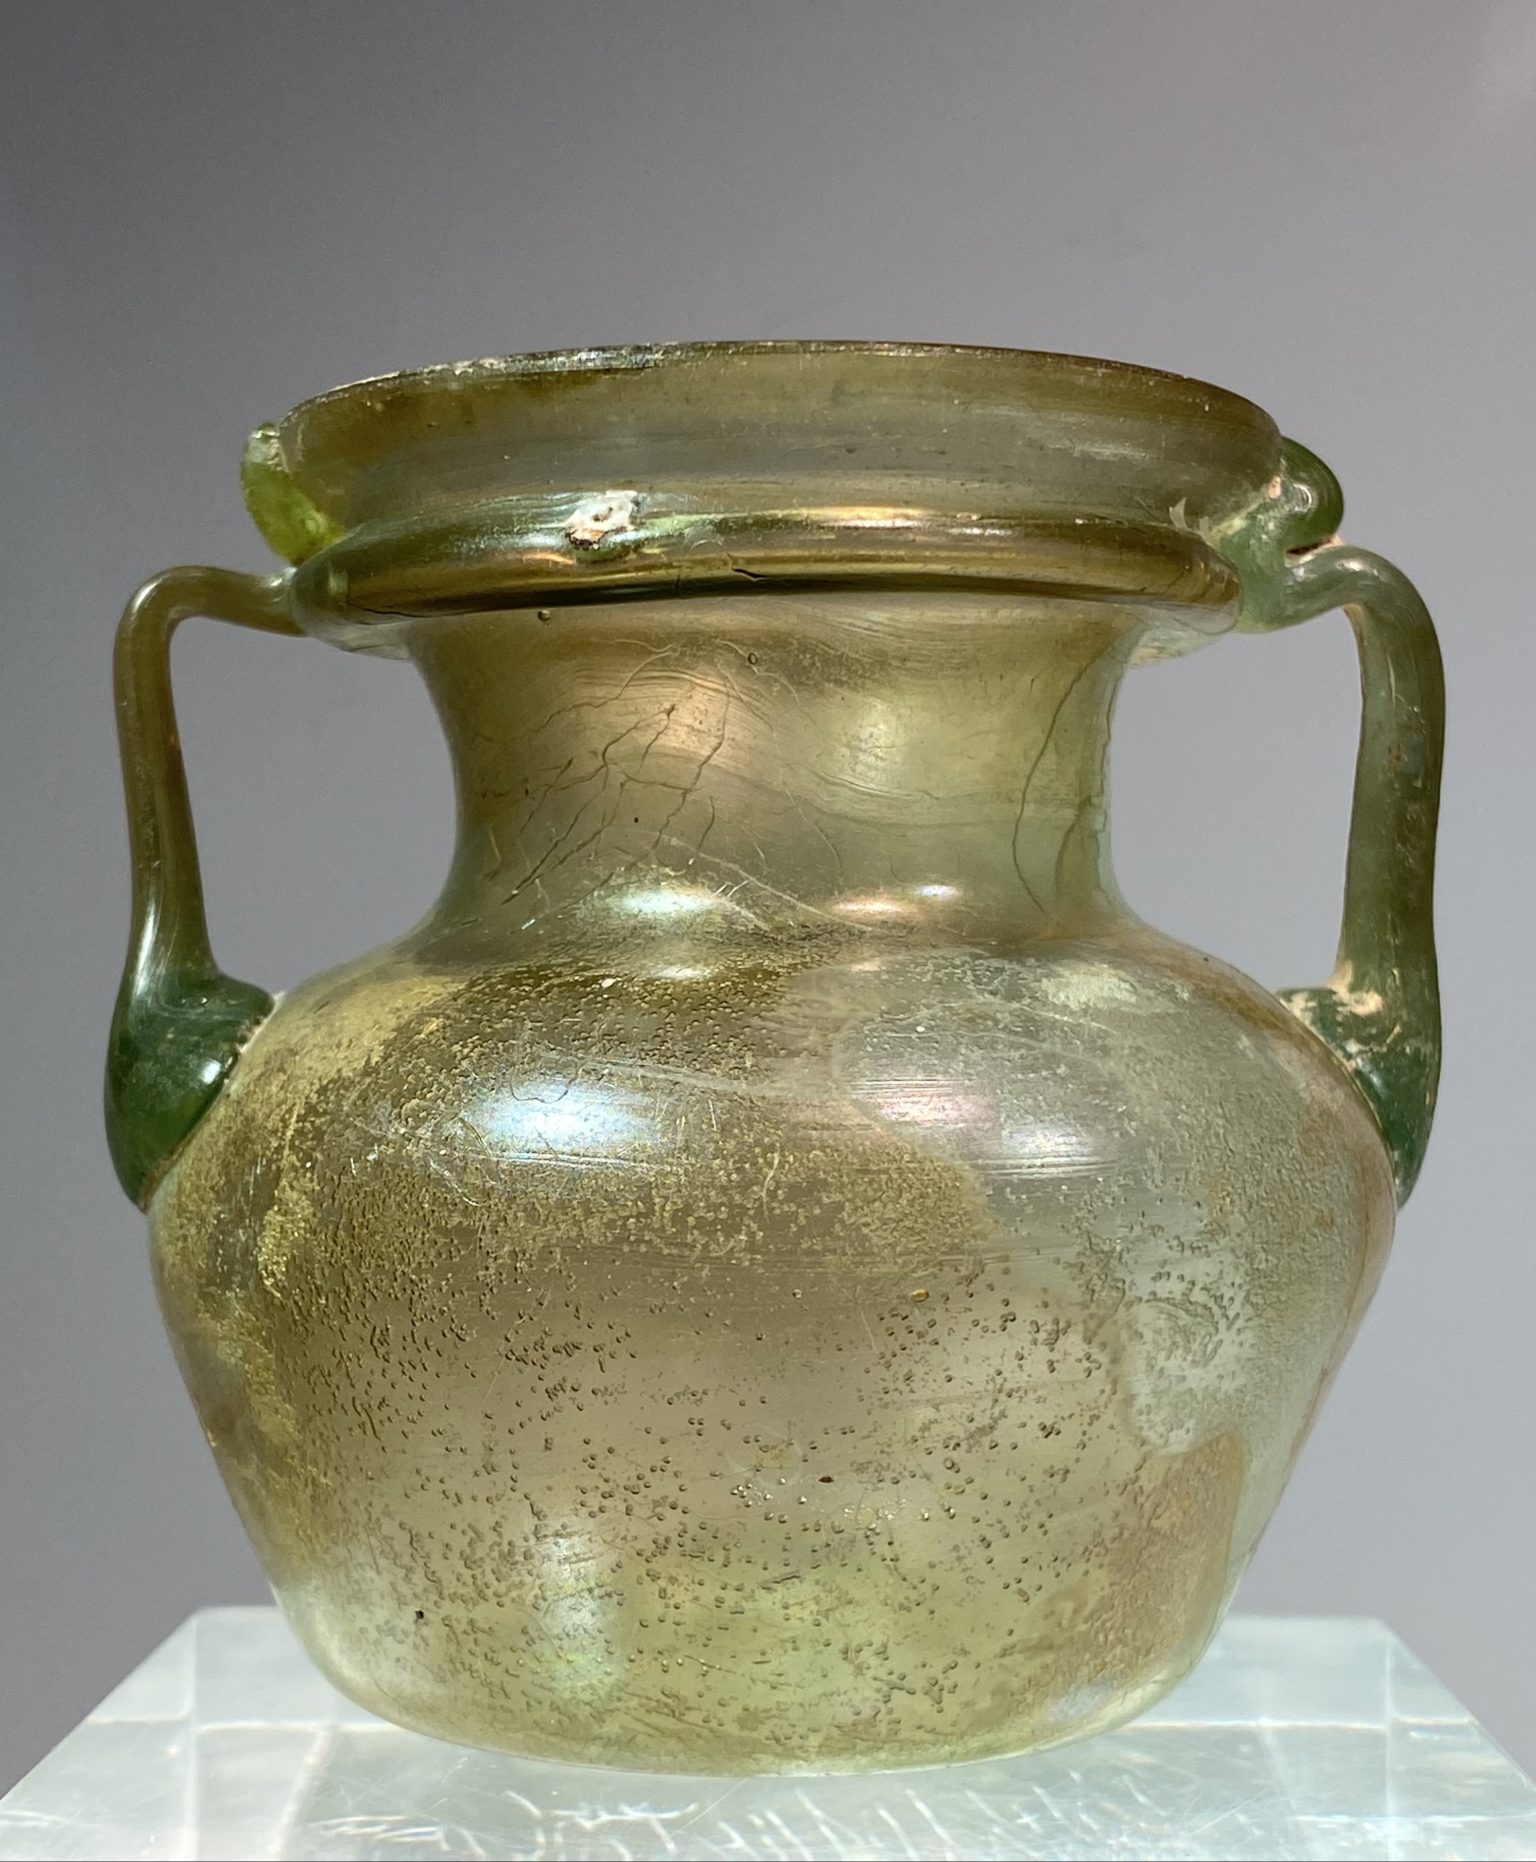 Roman glass jar